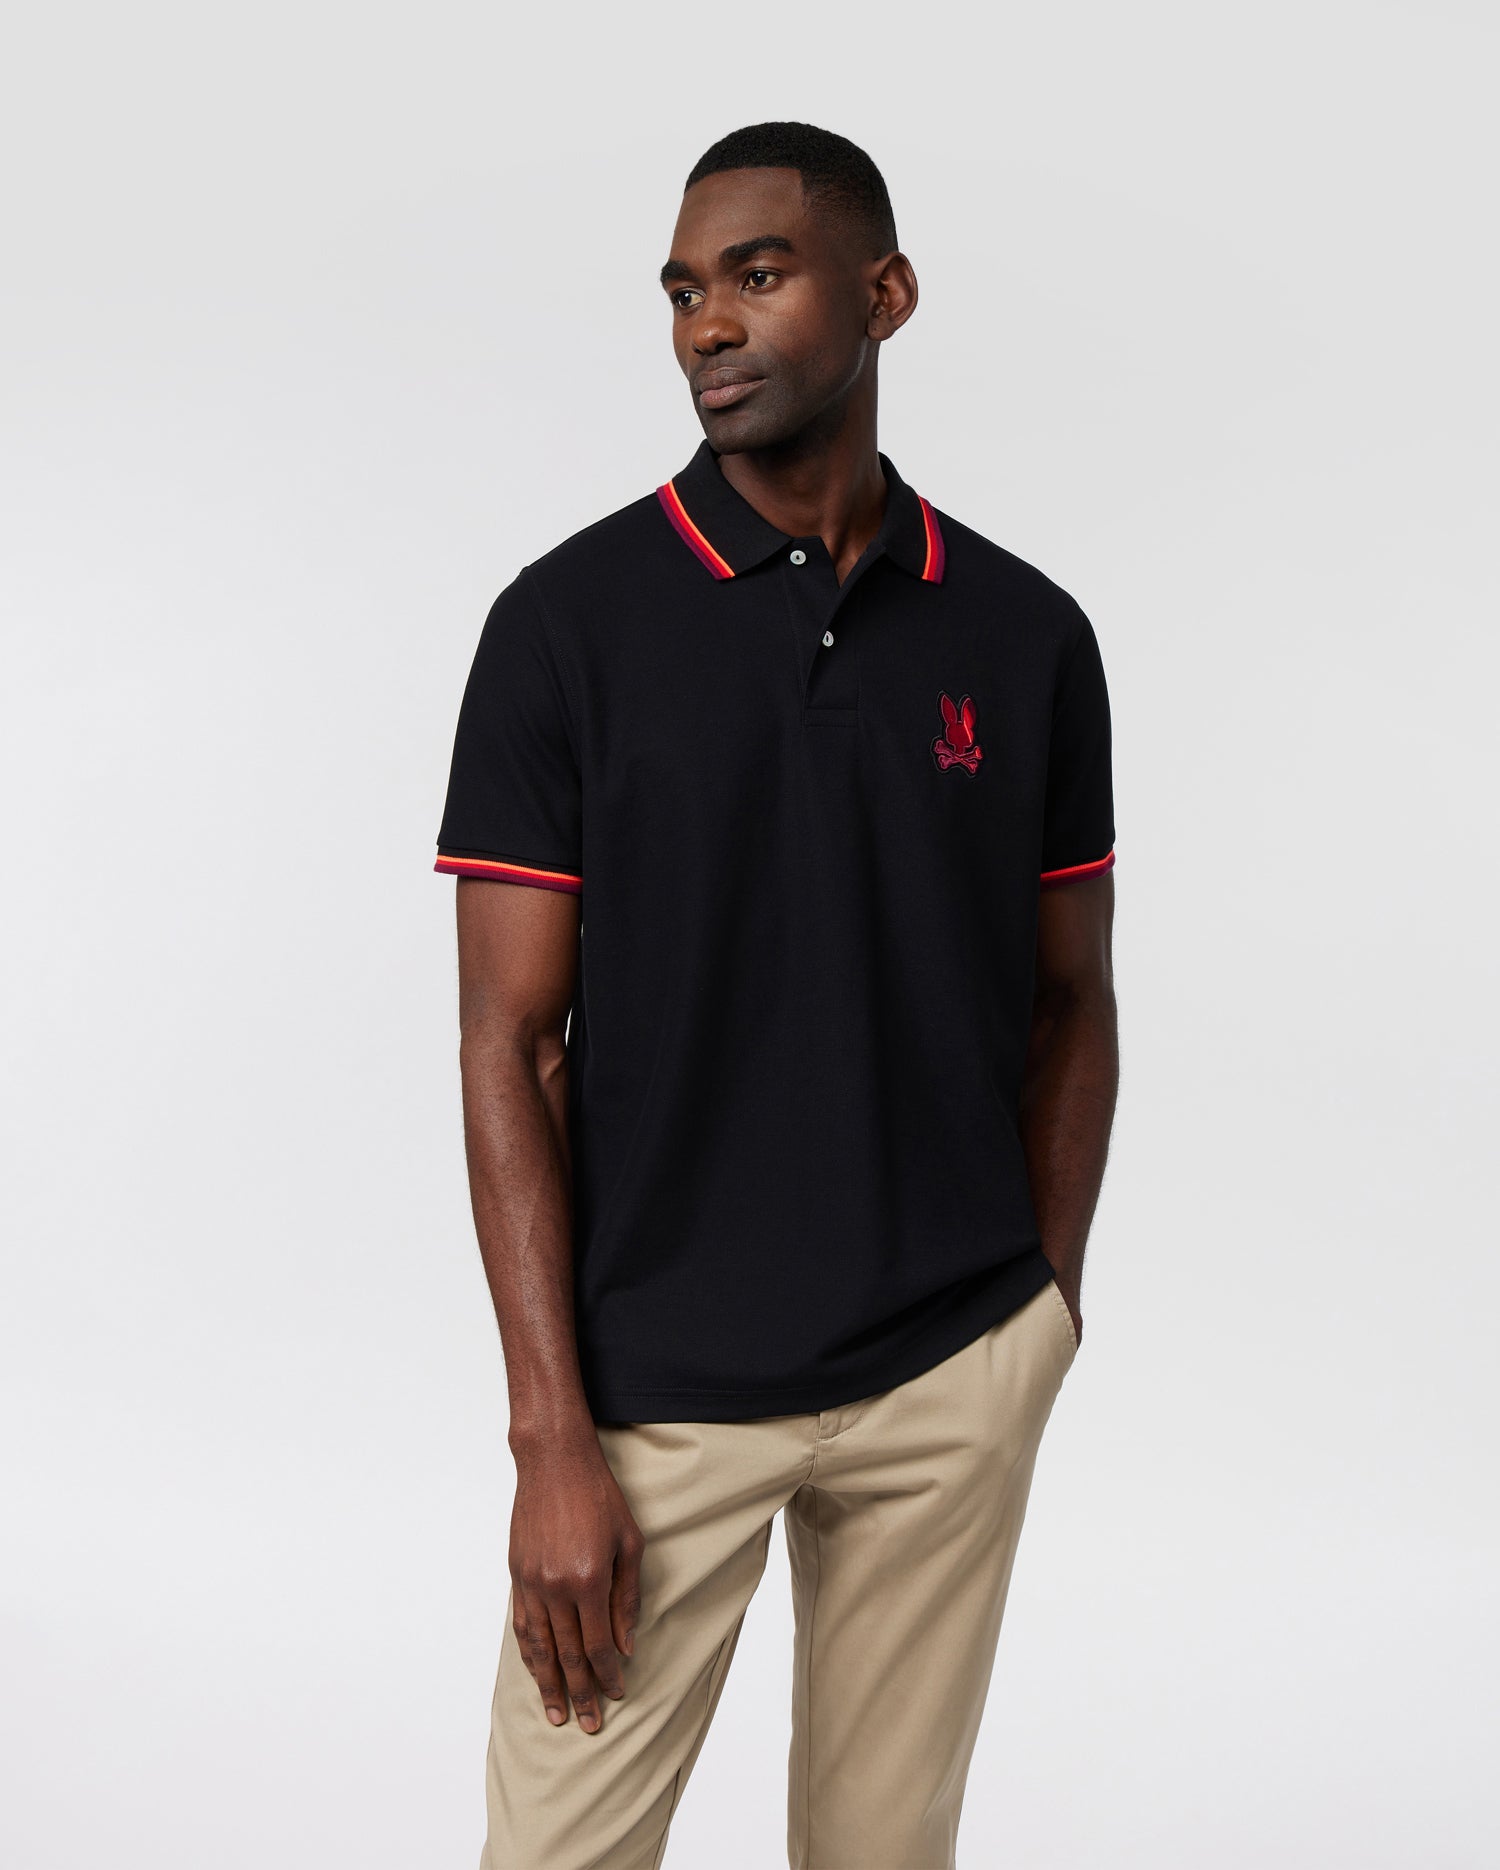 Polo Ralph Lauren Men's The Classic Fit Brazil Polo Shirt - Macy's